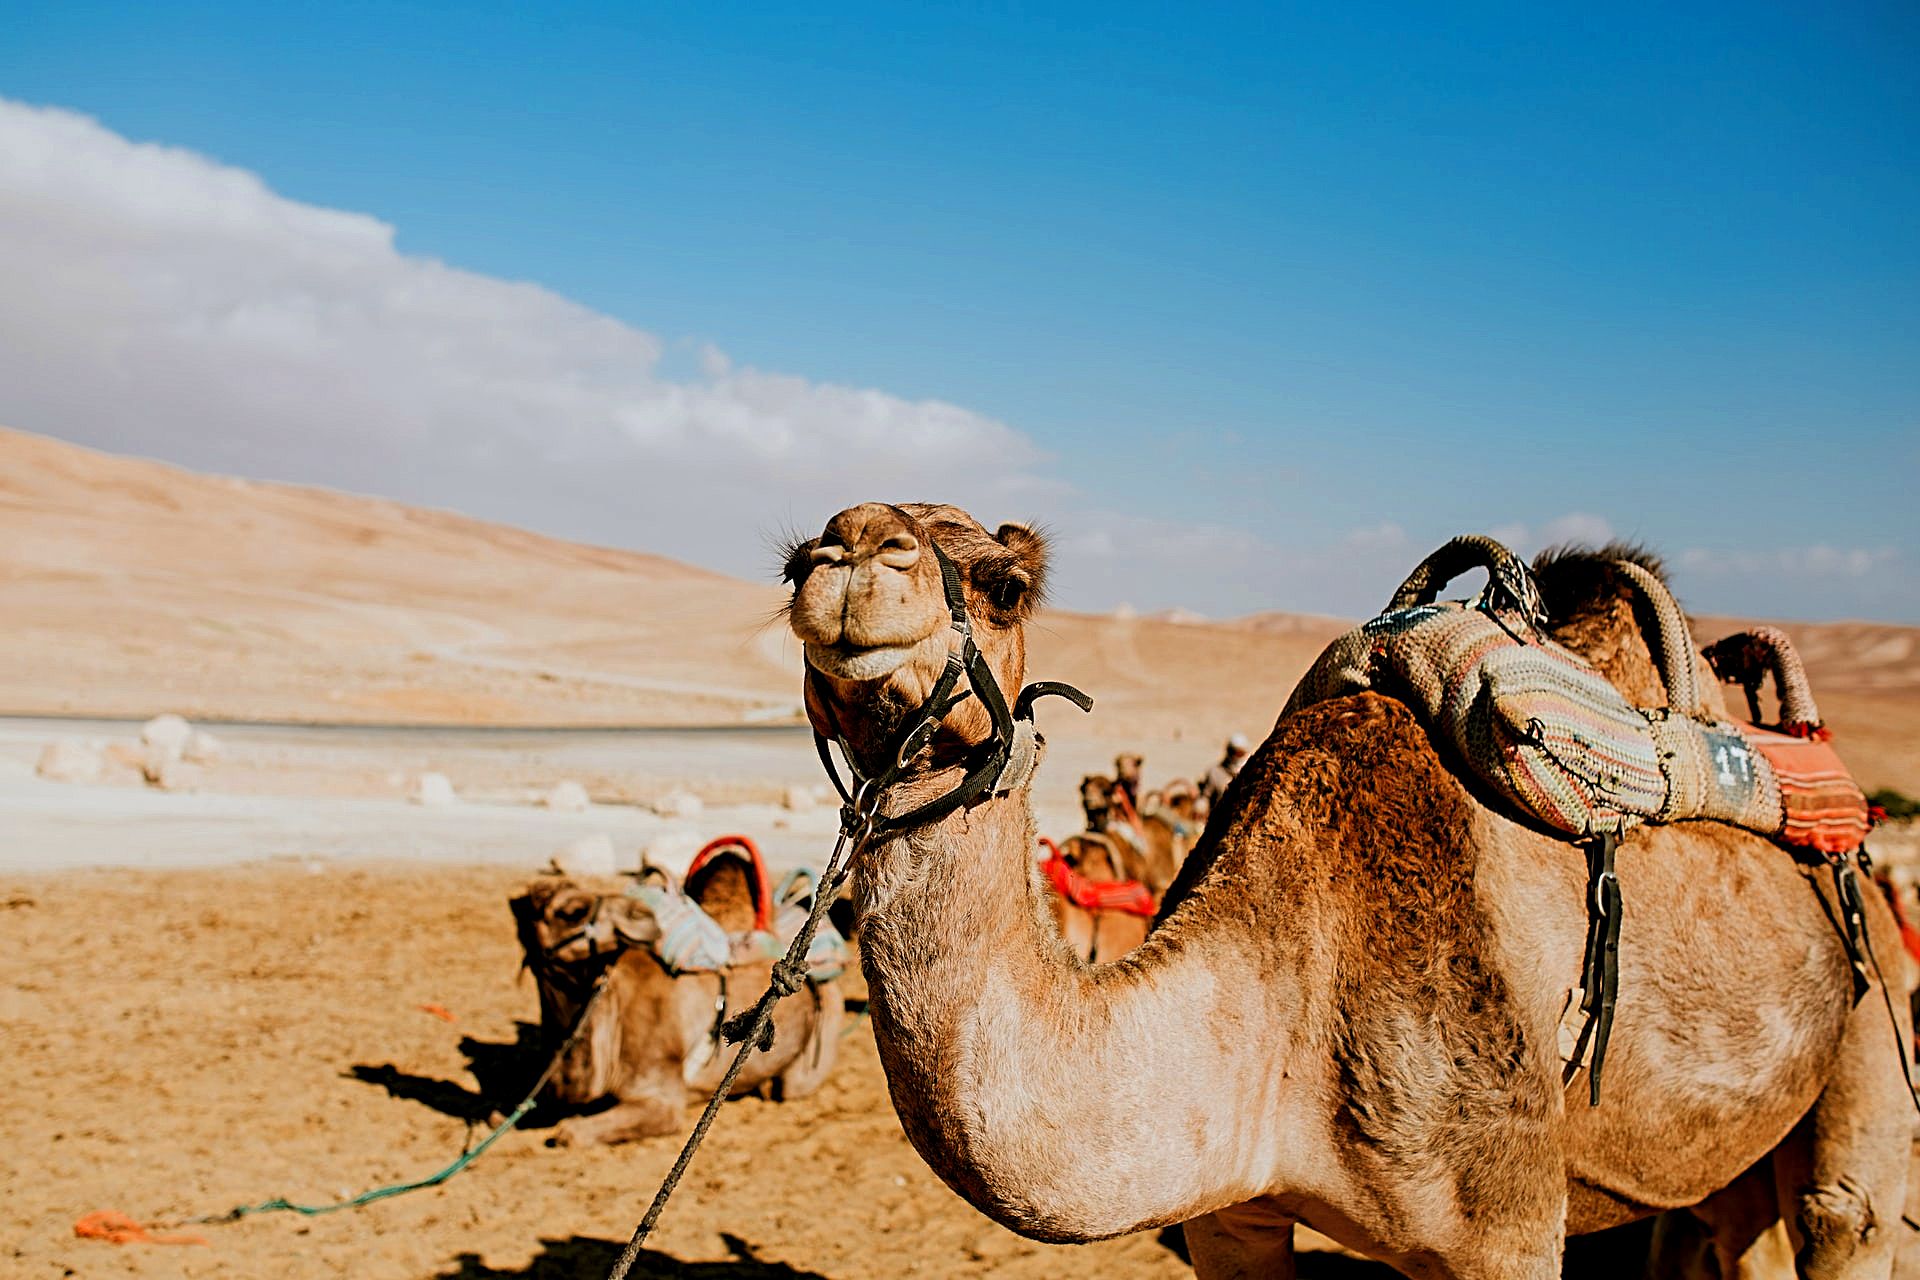 A camel in the Negev Desert